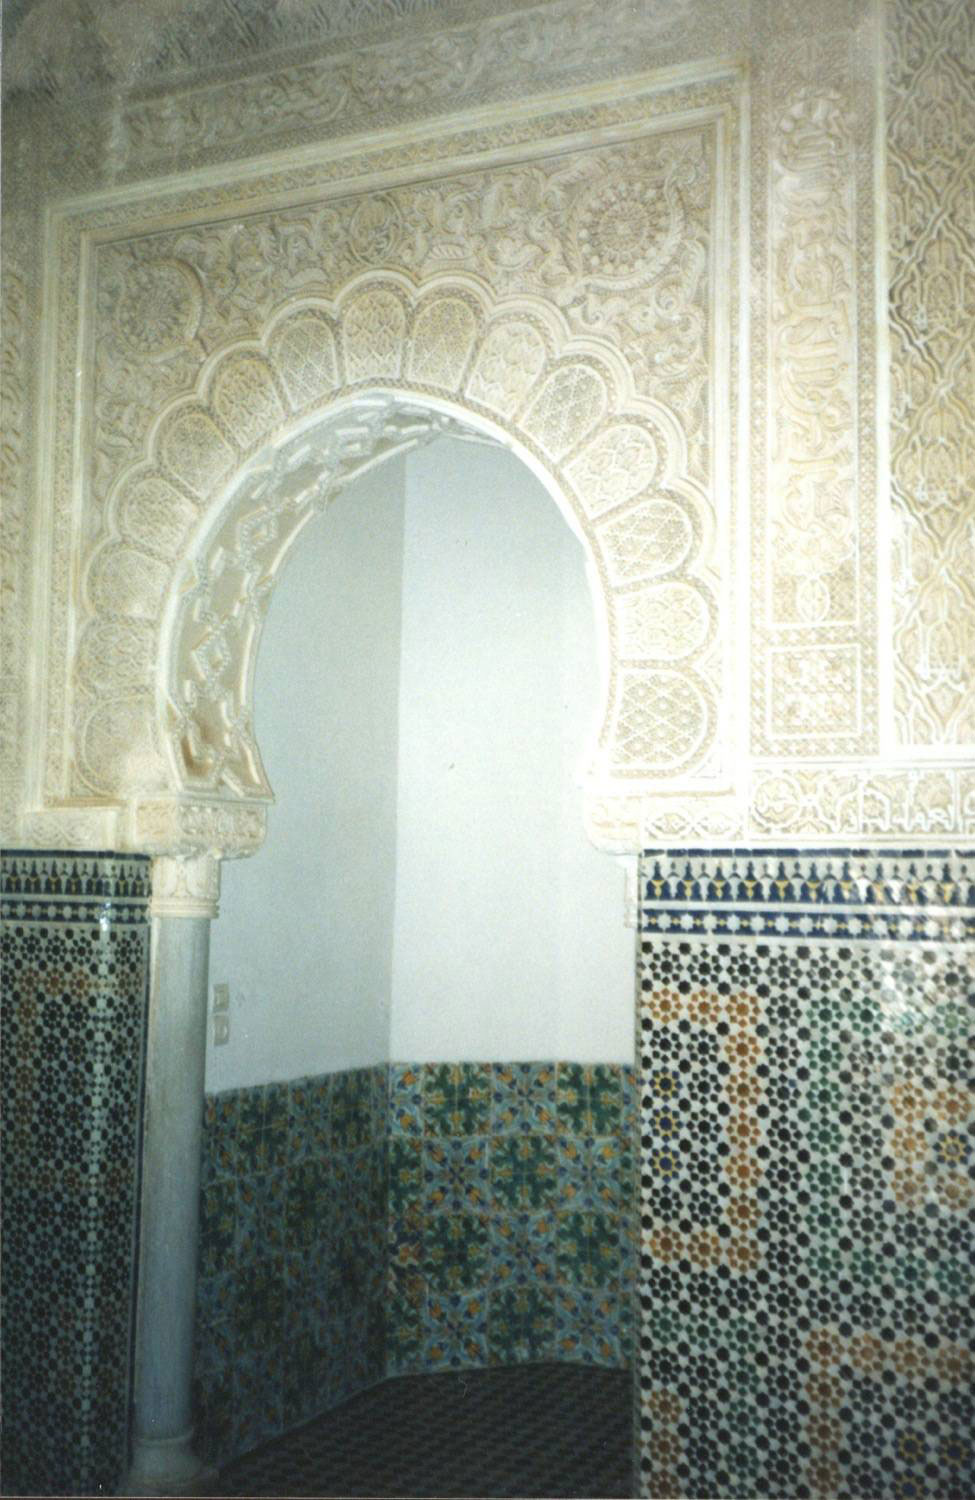 Mihrab of the madrasa